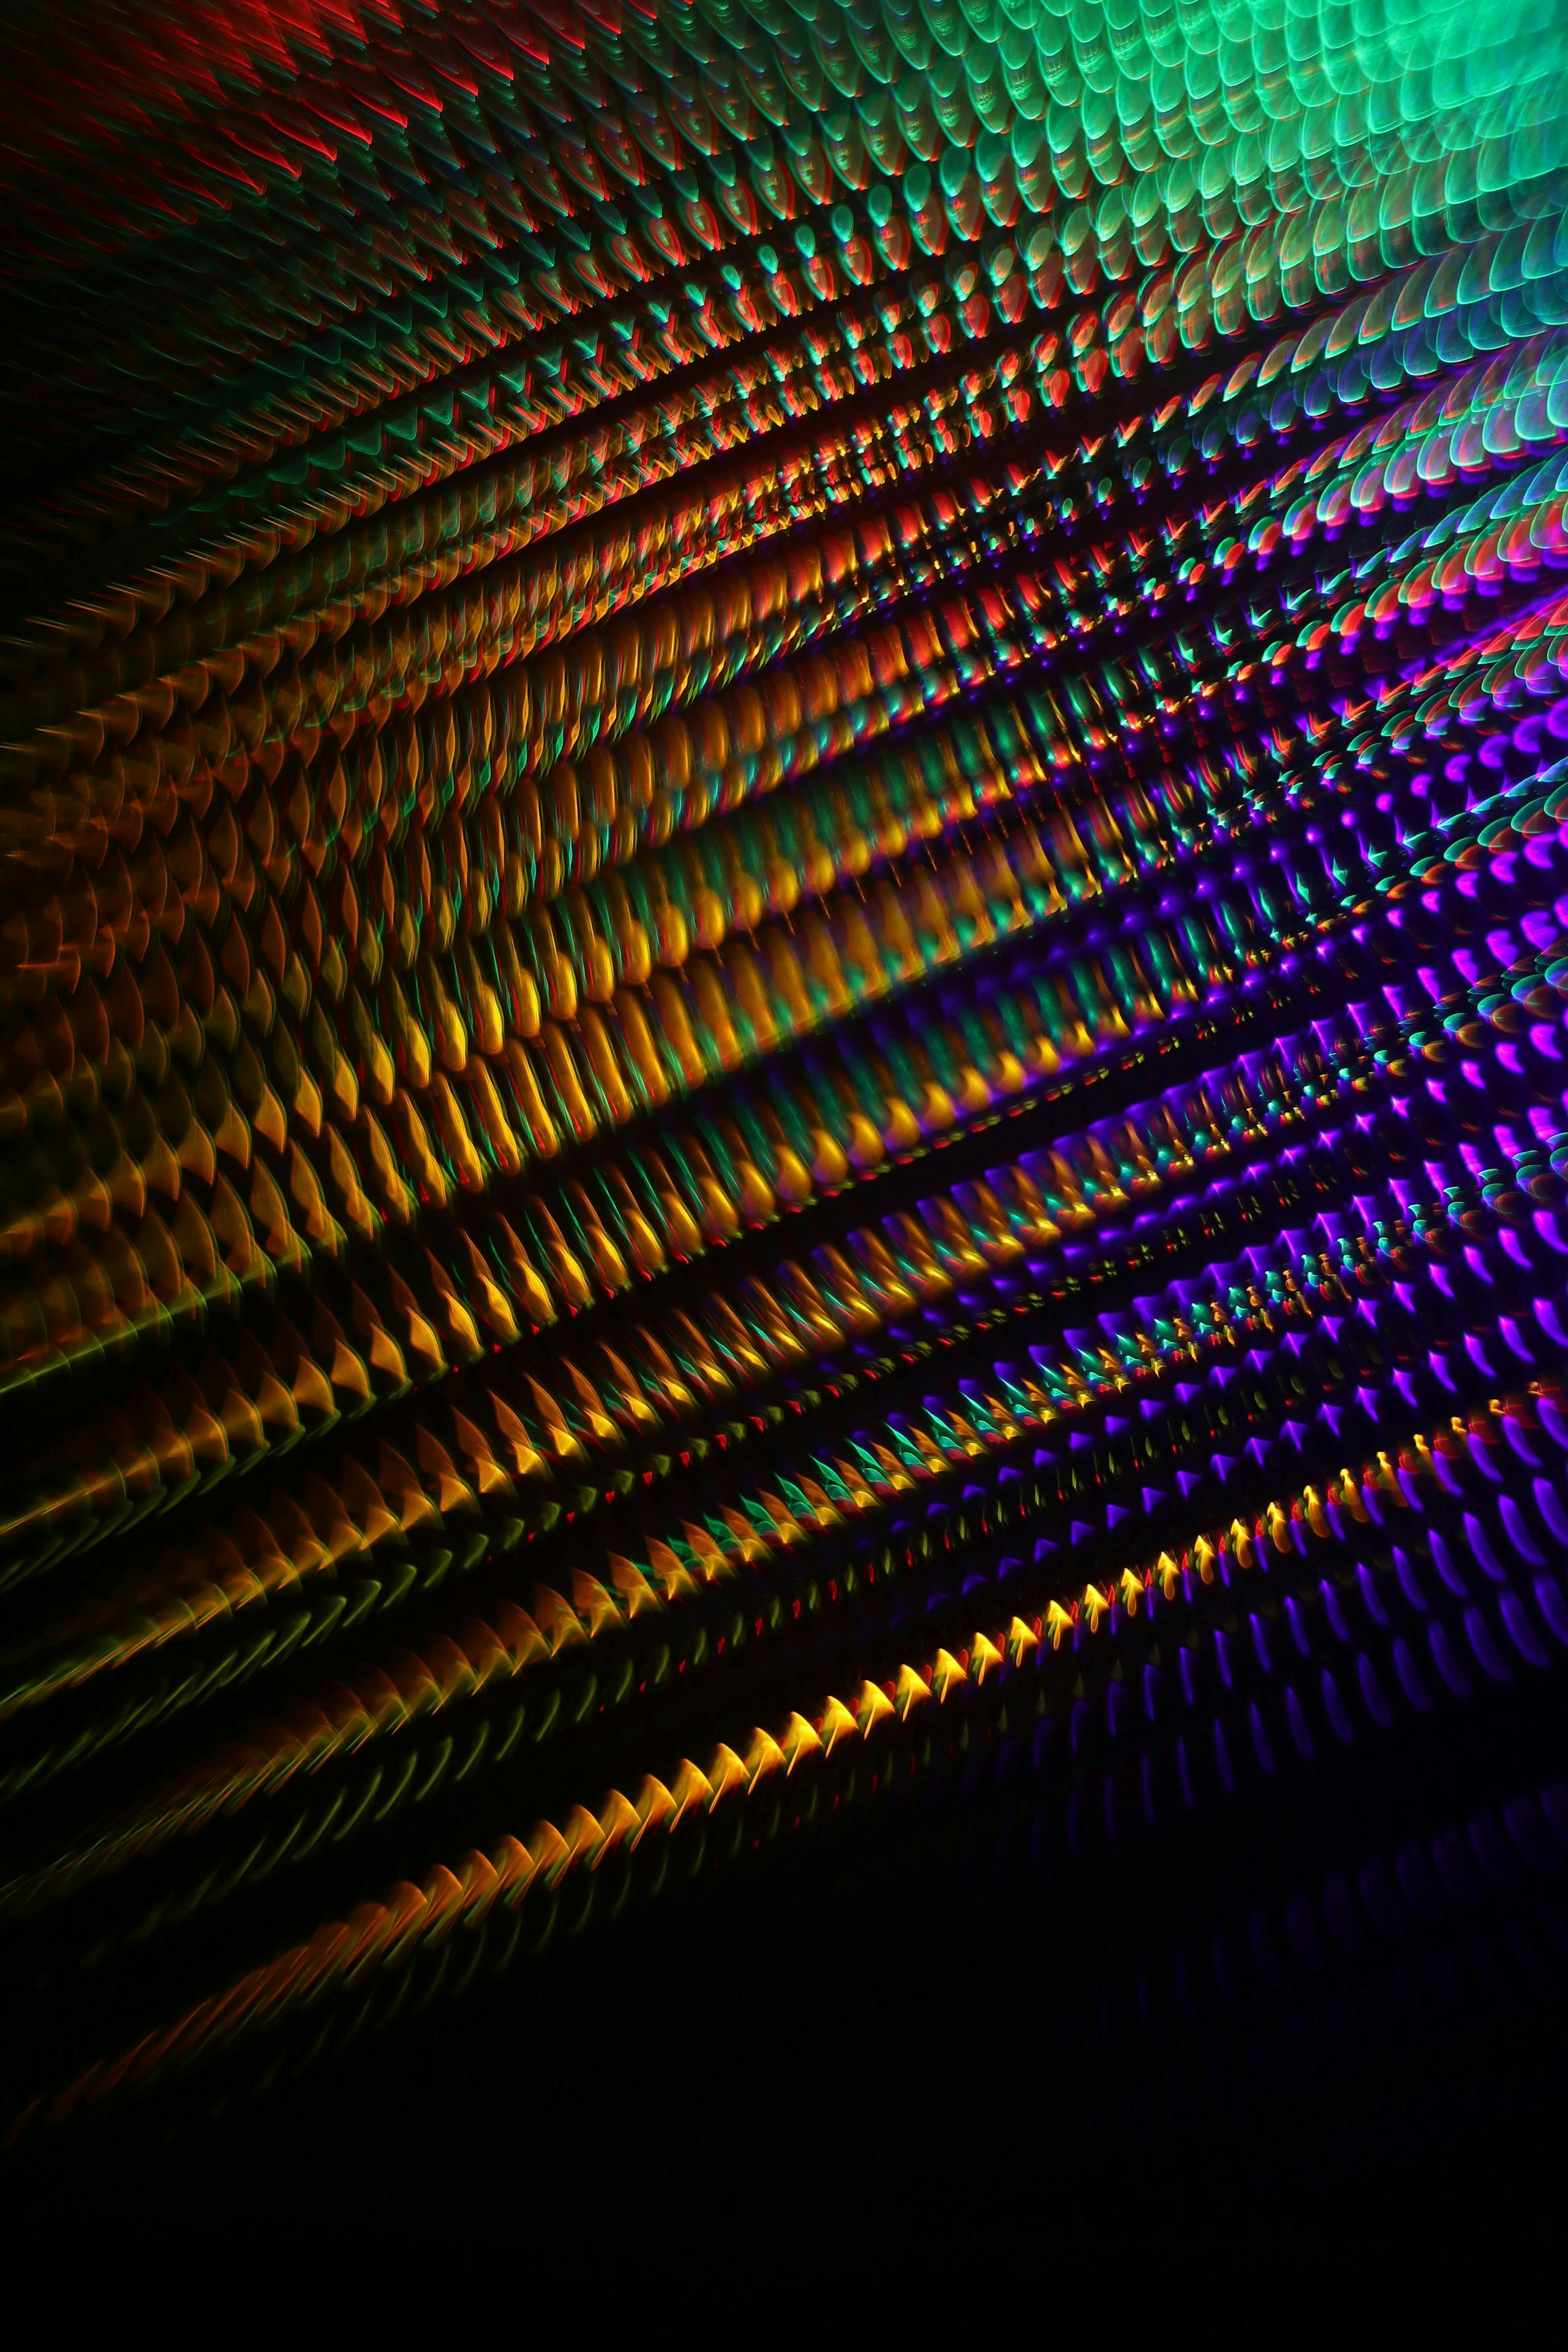 Hazy multi-colored lights on a dark background